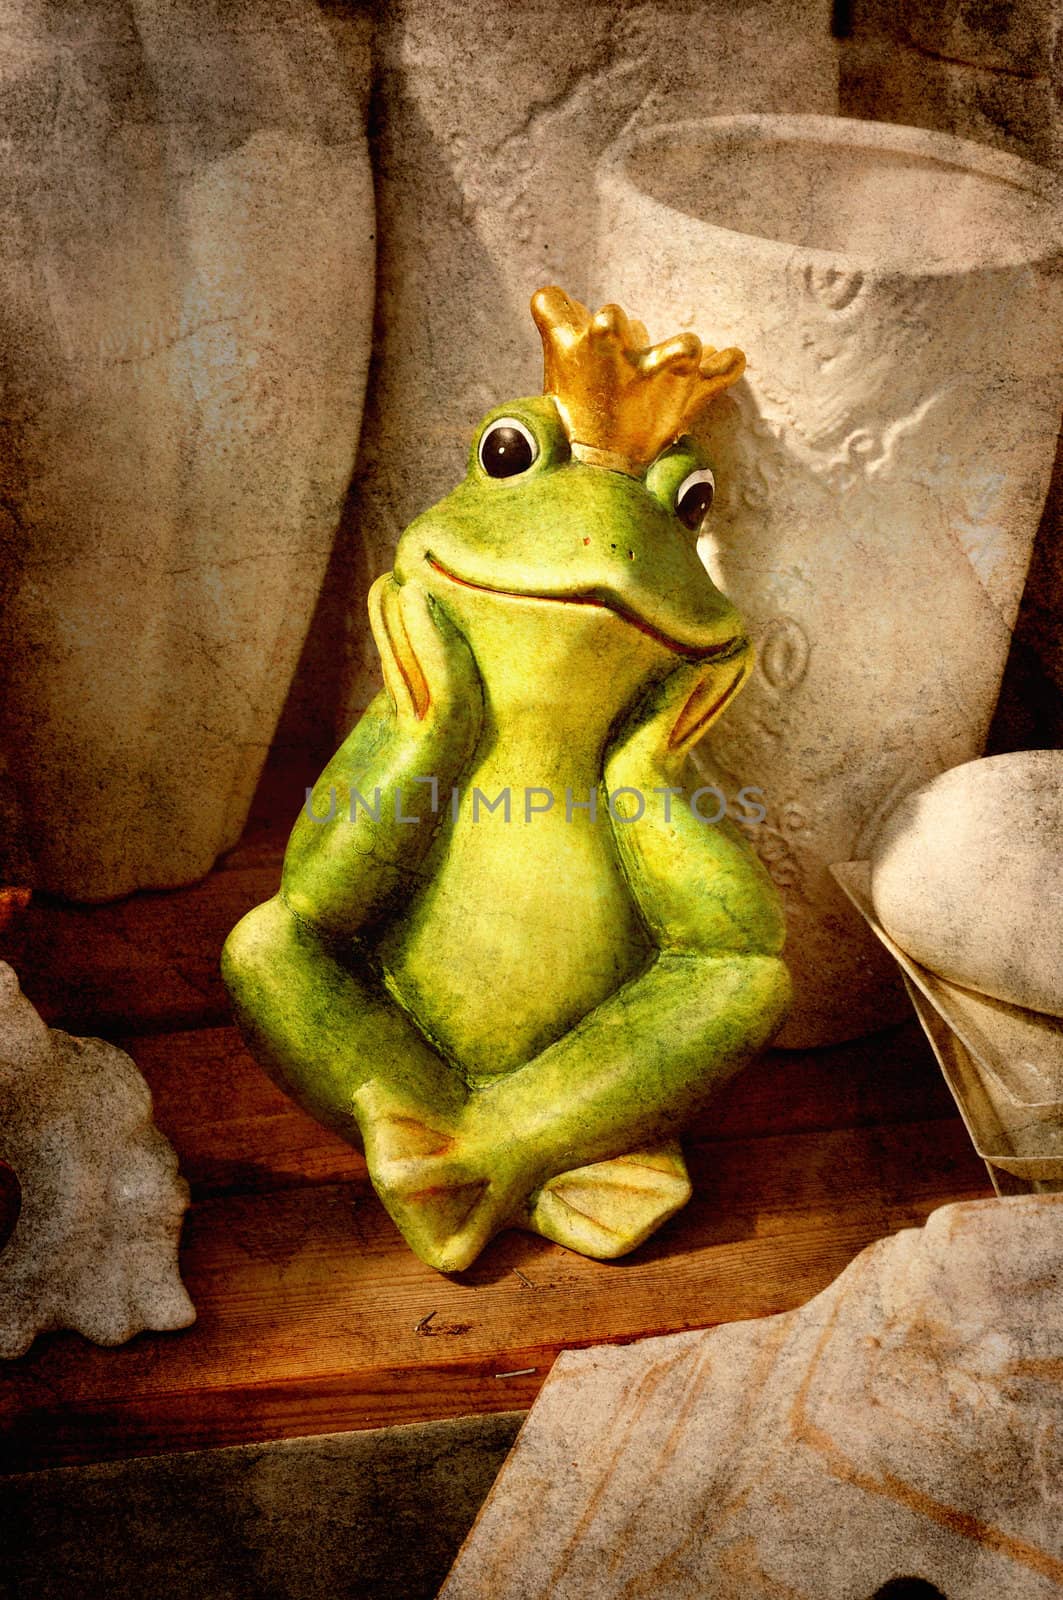 Frog prince sitting on a wooden shelf among vintage garden pots.